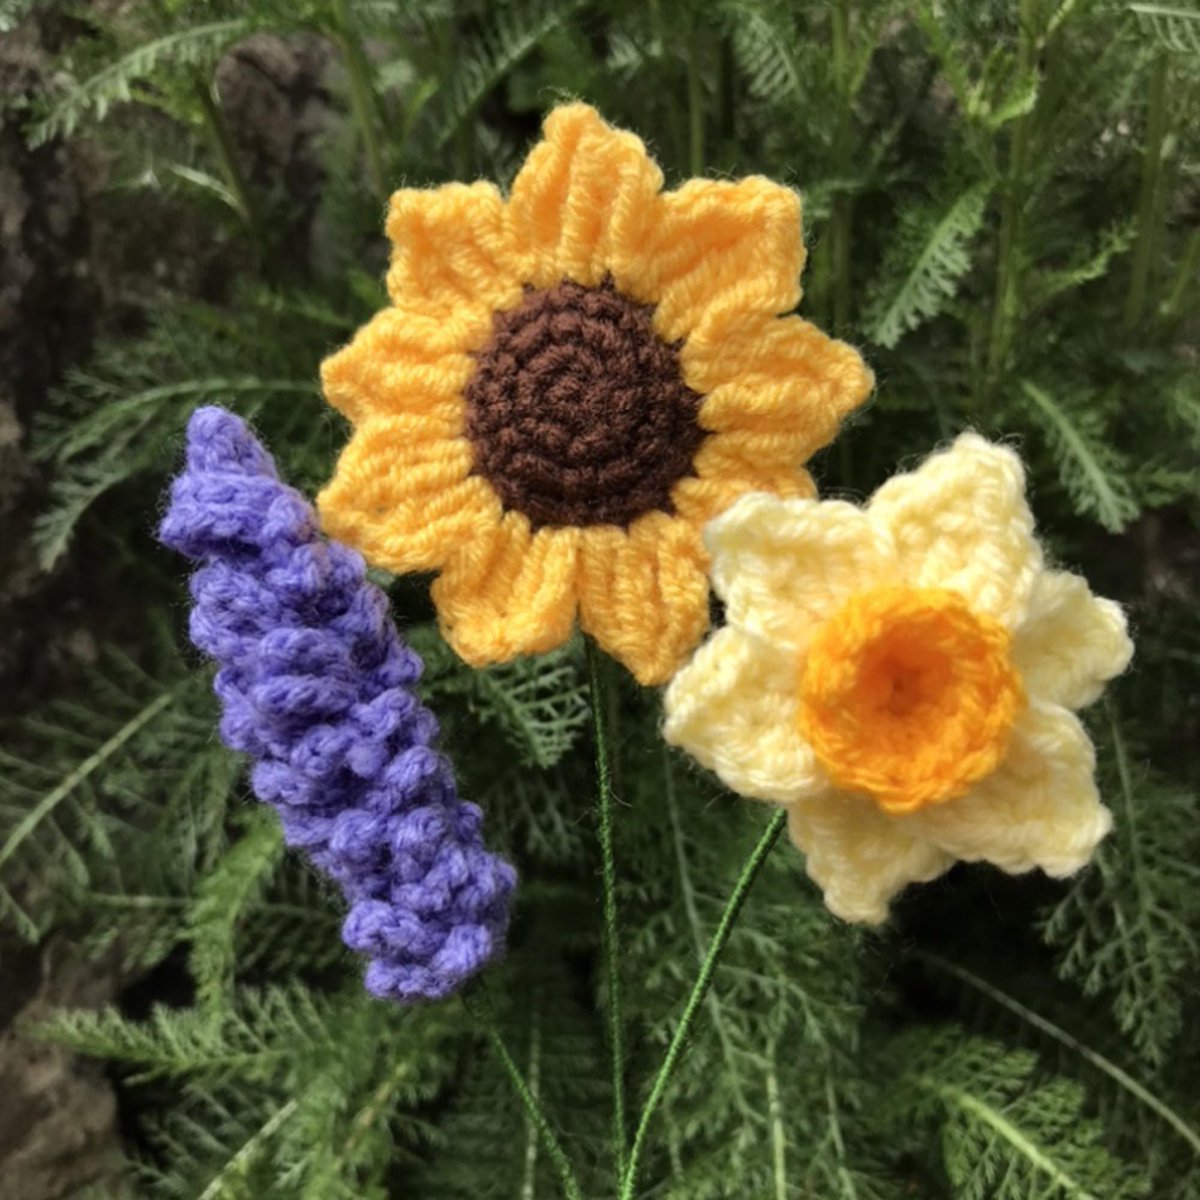 Crochet flowers are here! 🌻 #smallbuisness #shopindie #flowers #crochet ljhjewellery.co.uk/product/croche…